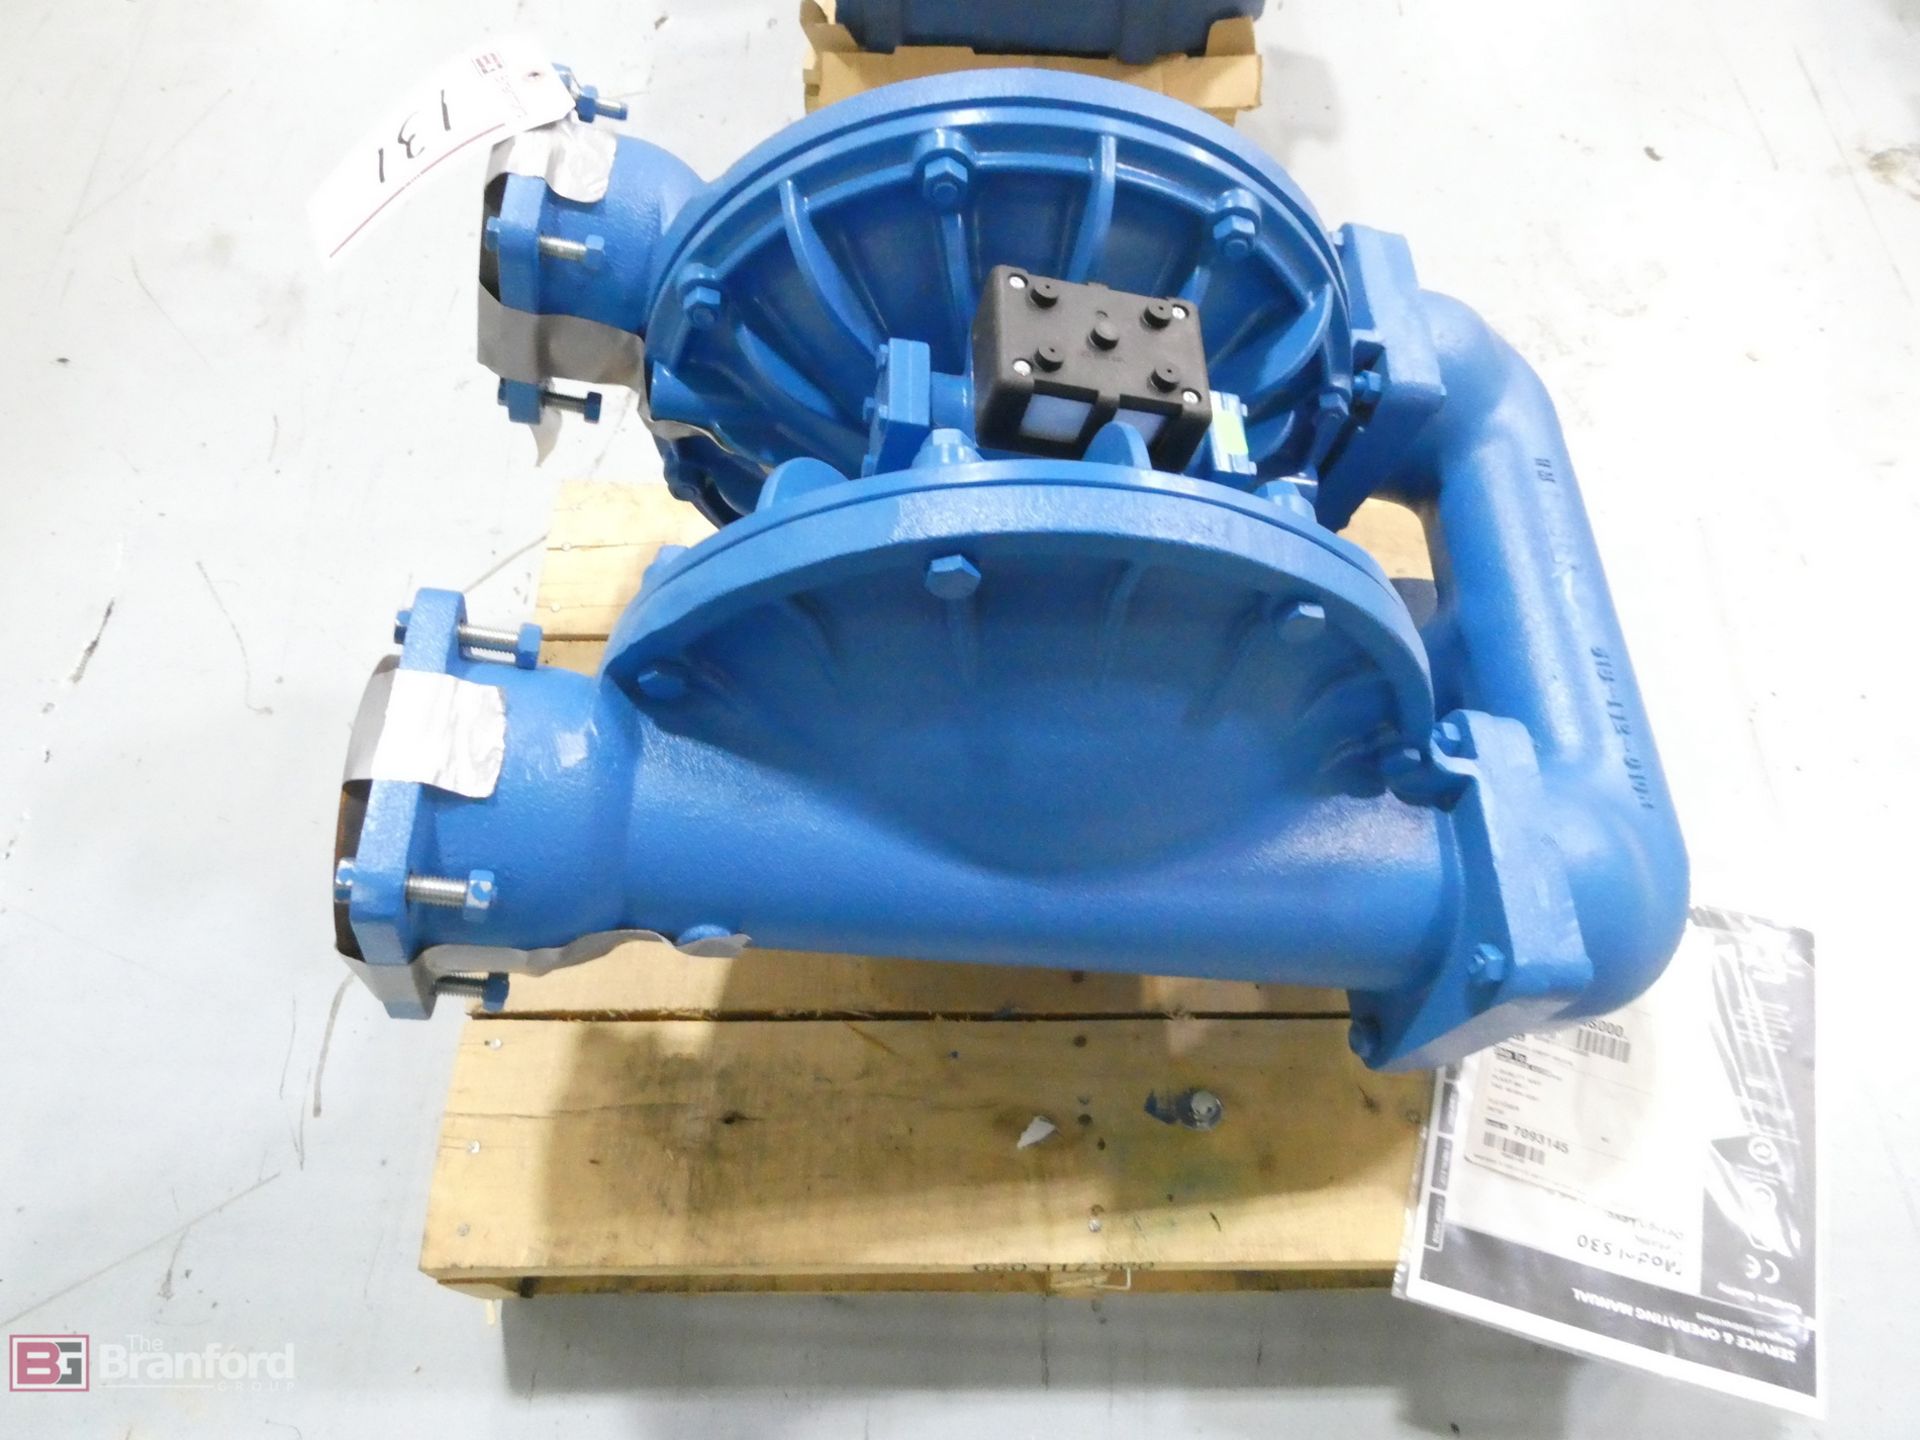 Sandpiper Model S30, Diaphragm Pump (New) - Image 2 of 4